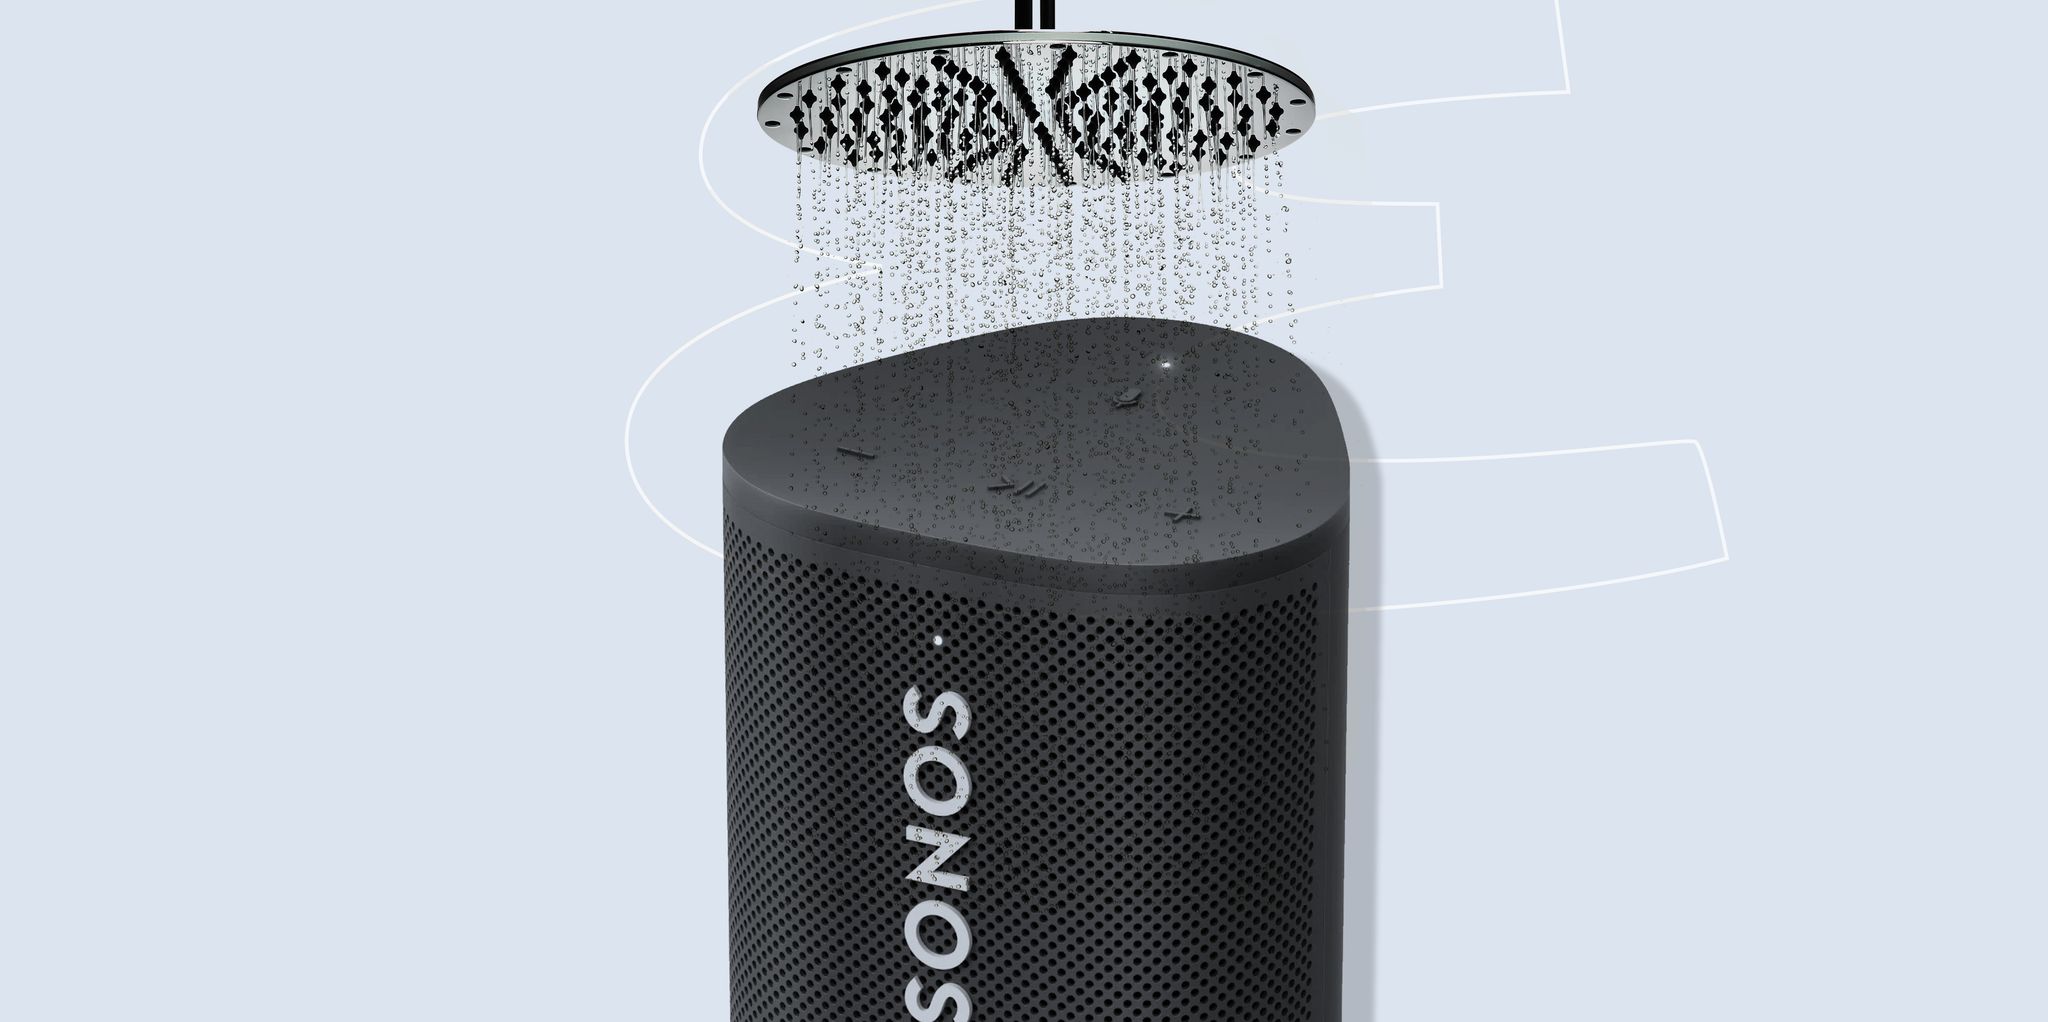 Mini Waterproof Shower Speaker, Bluetooth Mini Portable Stereo Speaker